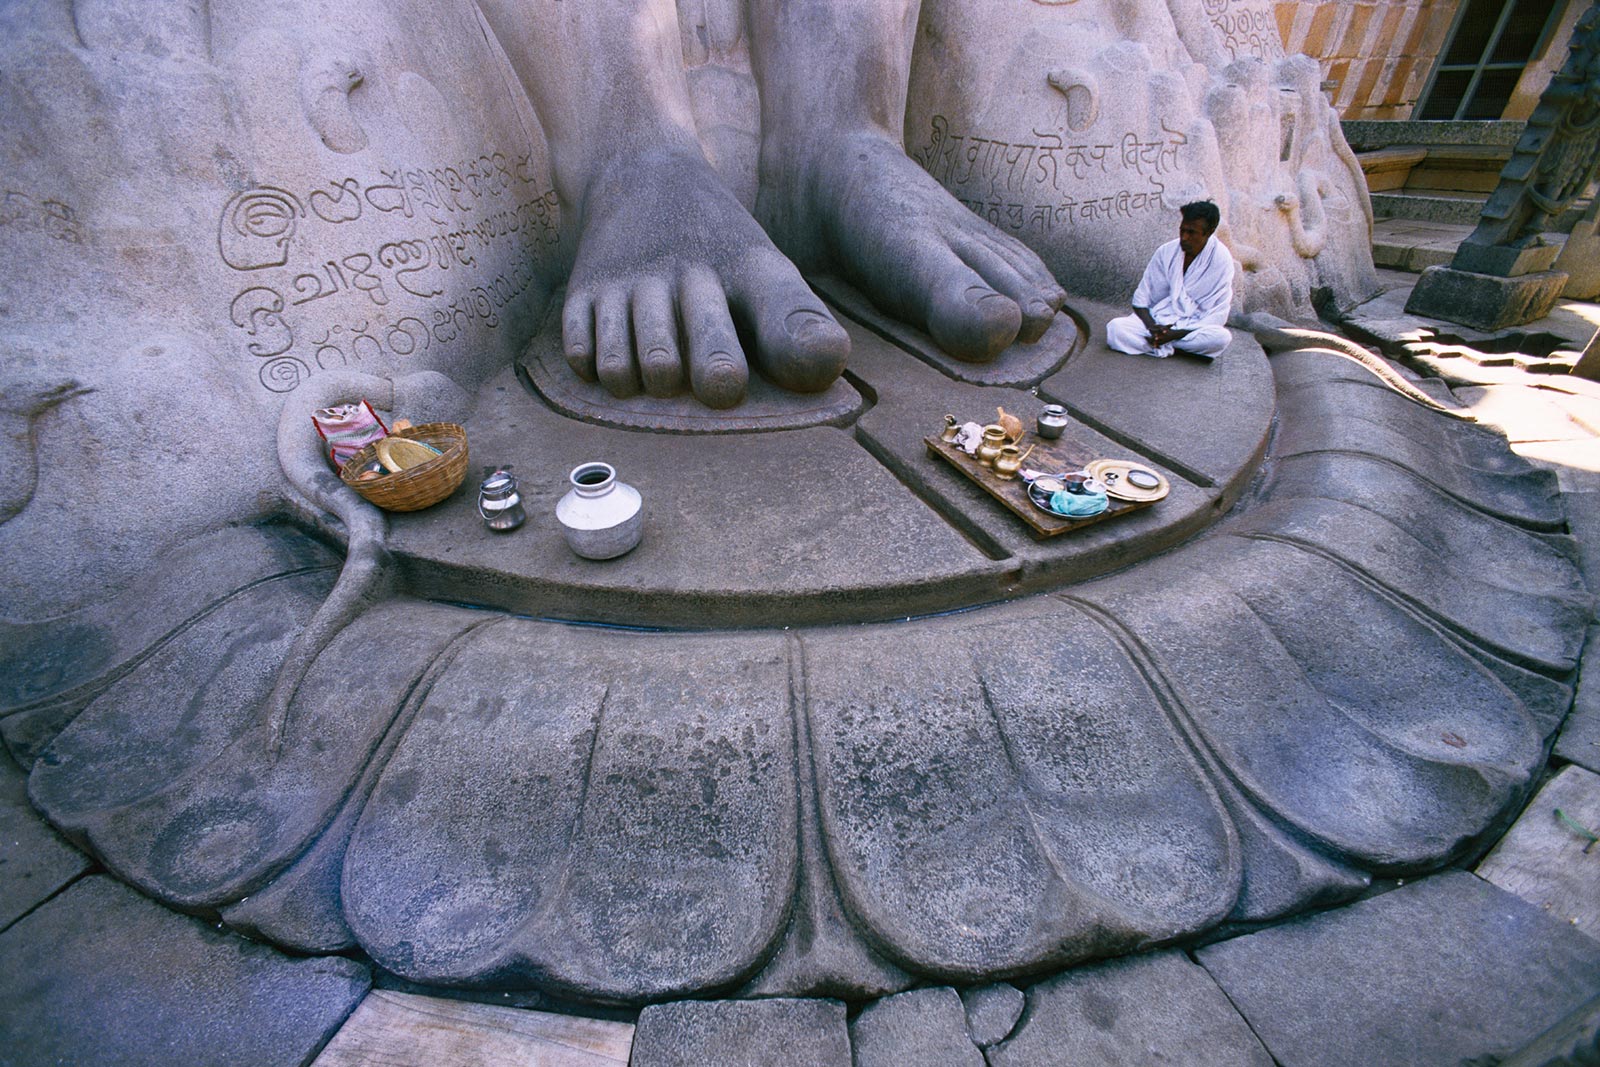 The Holy Feet of the Sri Gomatheswar statue, Shravanabelagola, India